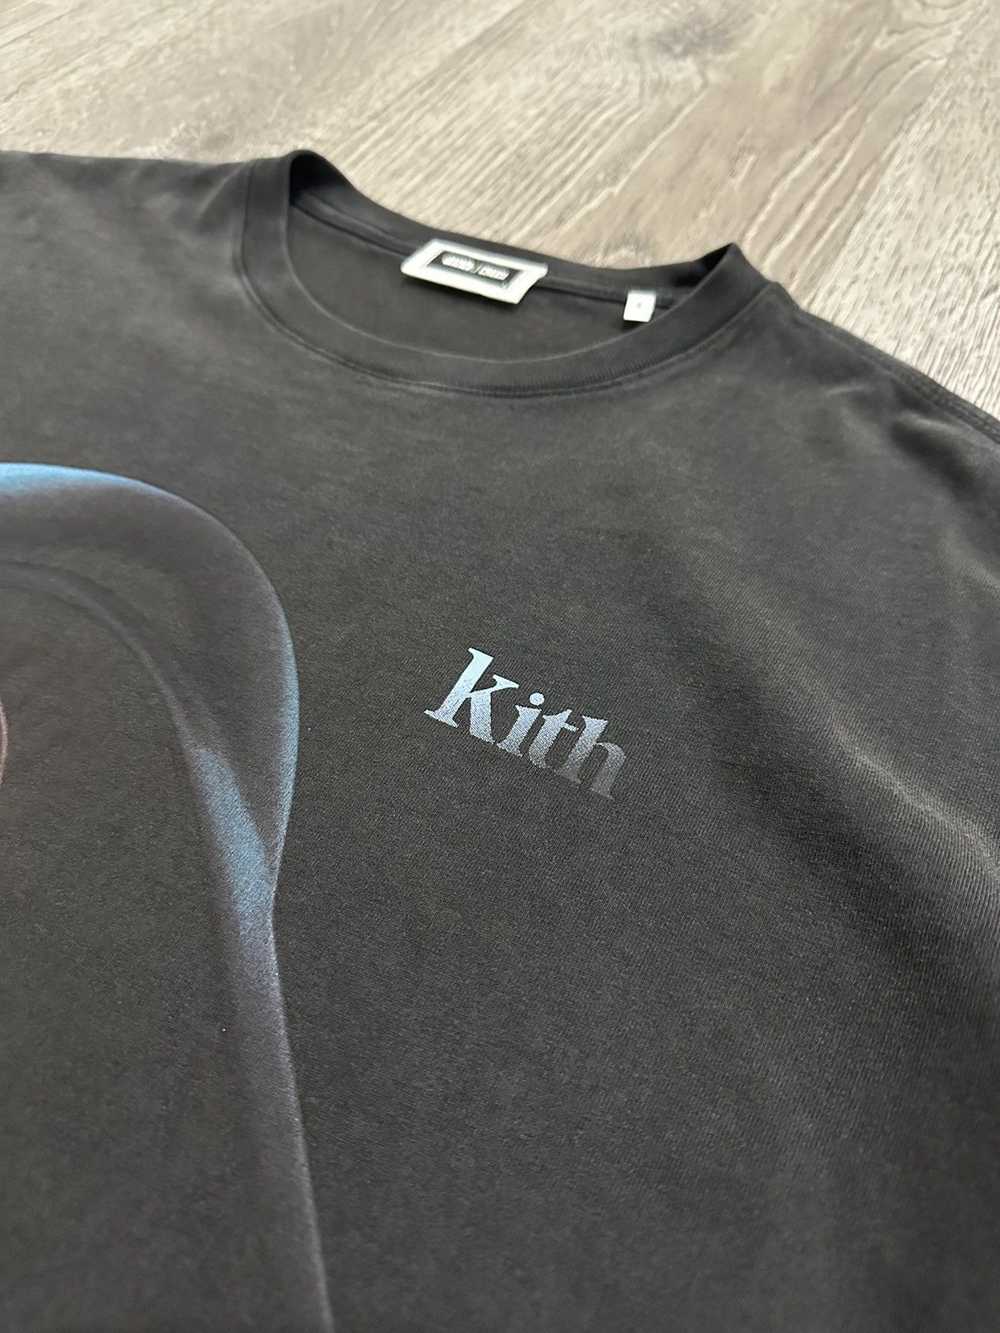 Kith Kith Star Wars Vintage T Shirt - image 5